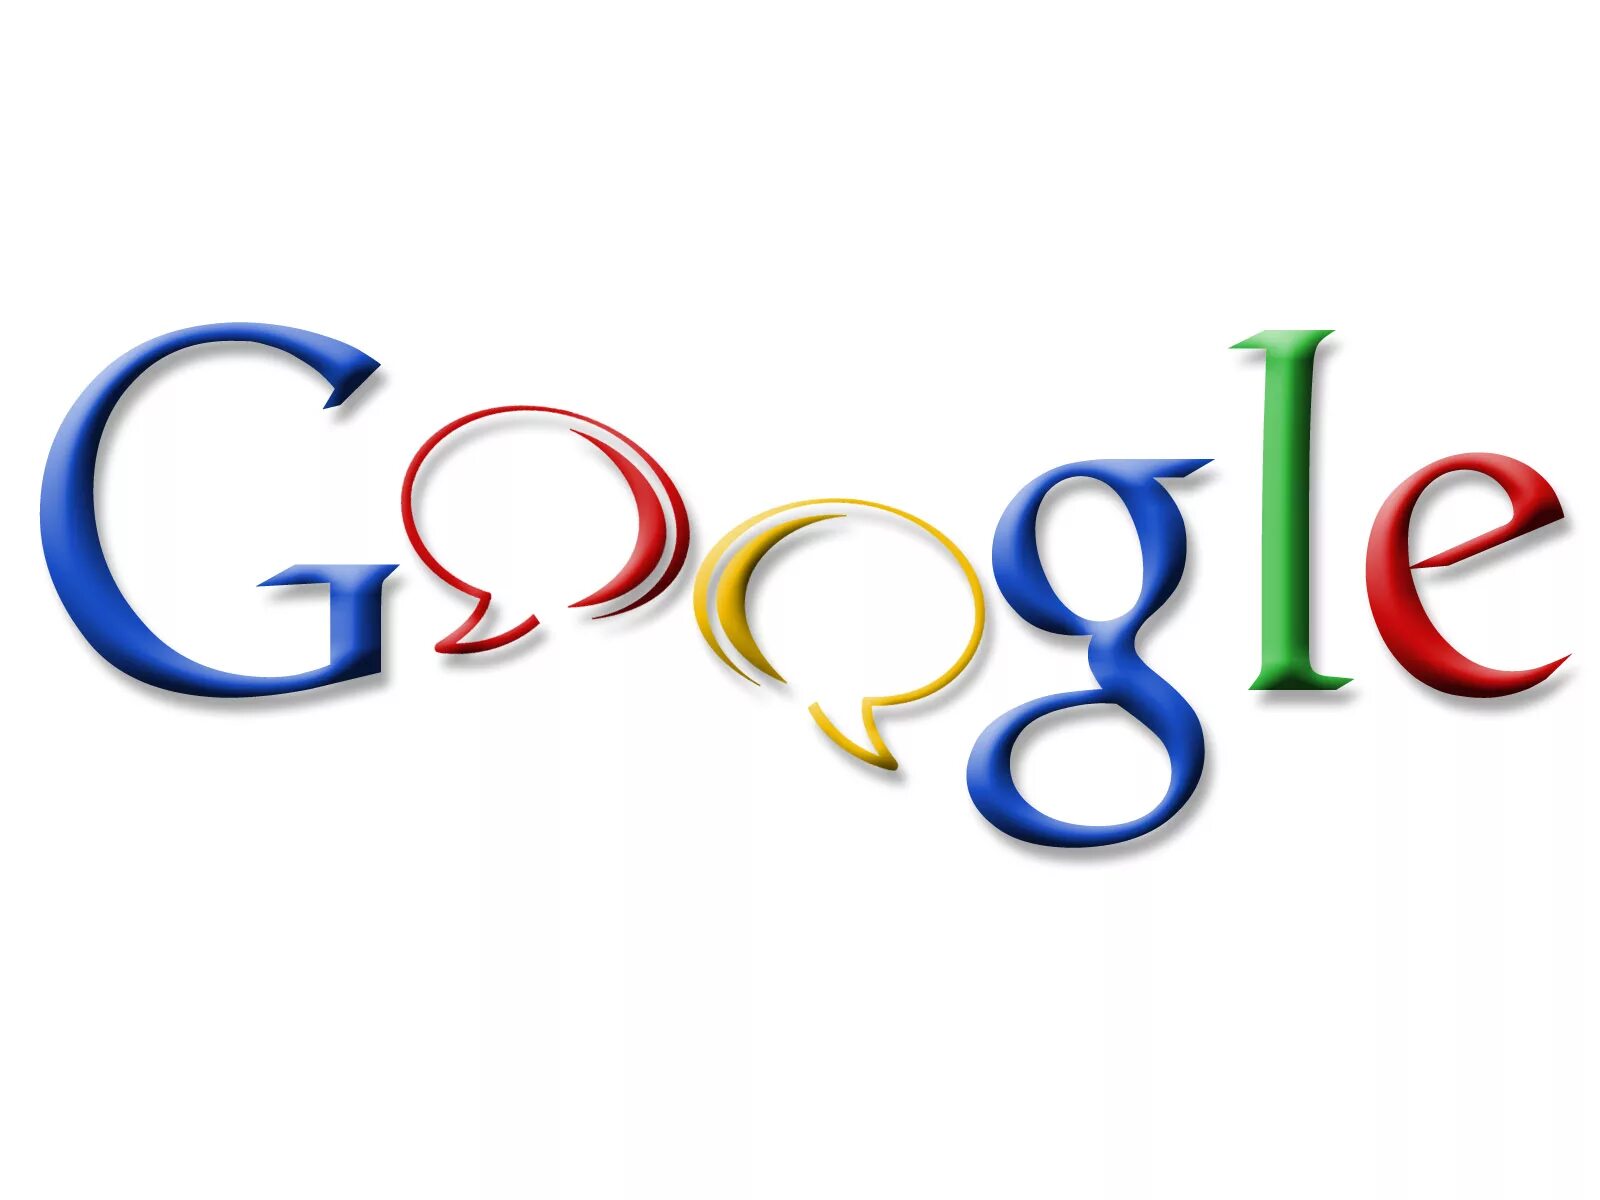 Channel google. Гугл. Логотип компании гугл. Гугл без фона.